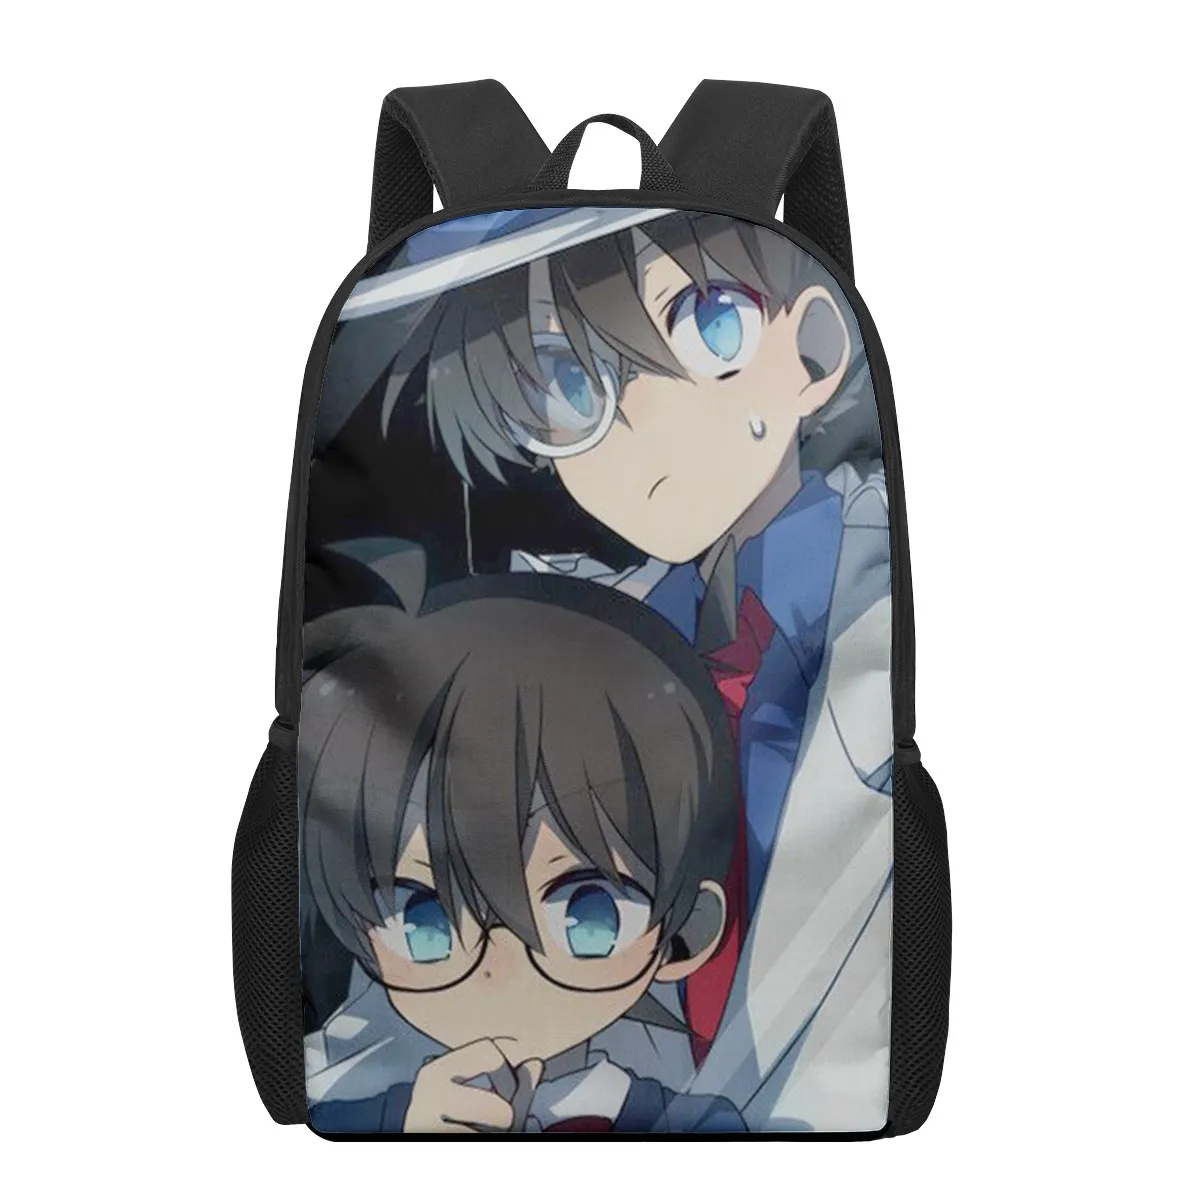 Detective Conan Anime School Bags For Boys 3D Print School Kids Bag Kindergarten Backpack Girls Child Bookbag Mochila Escolar